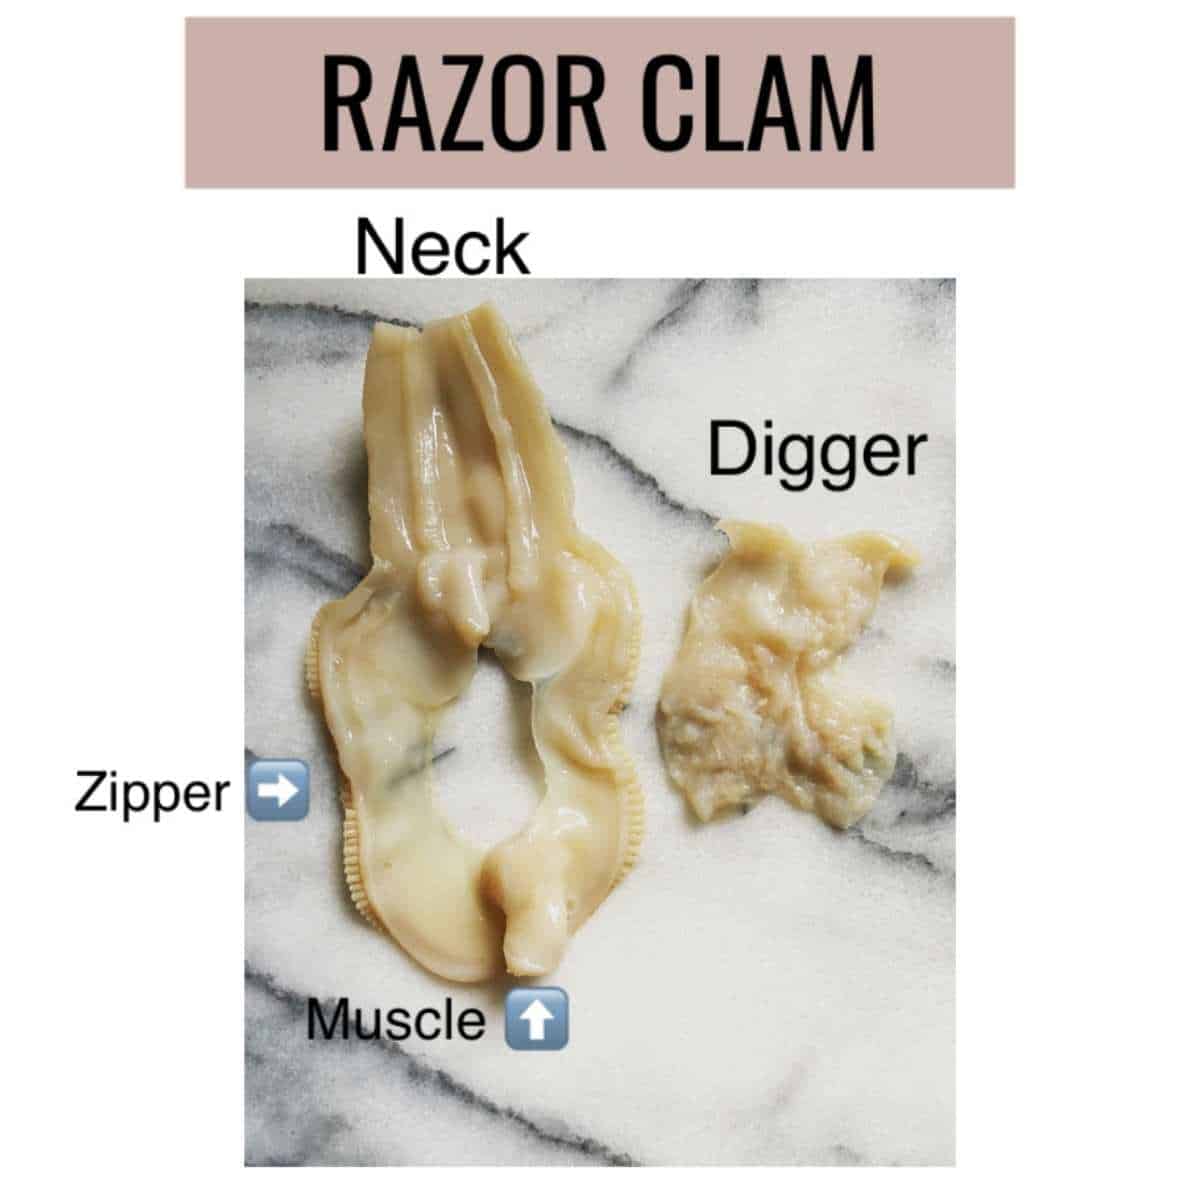 razor clam anatomy